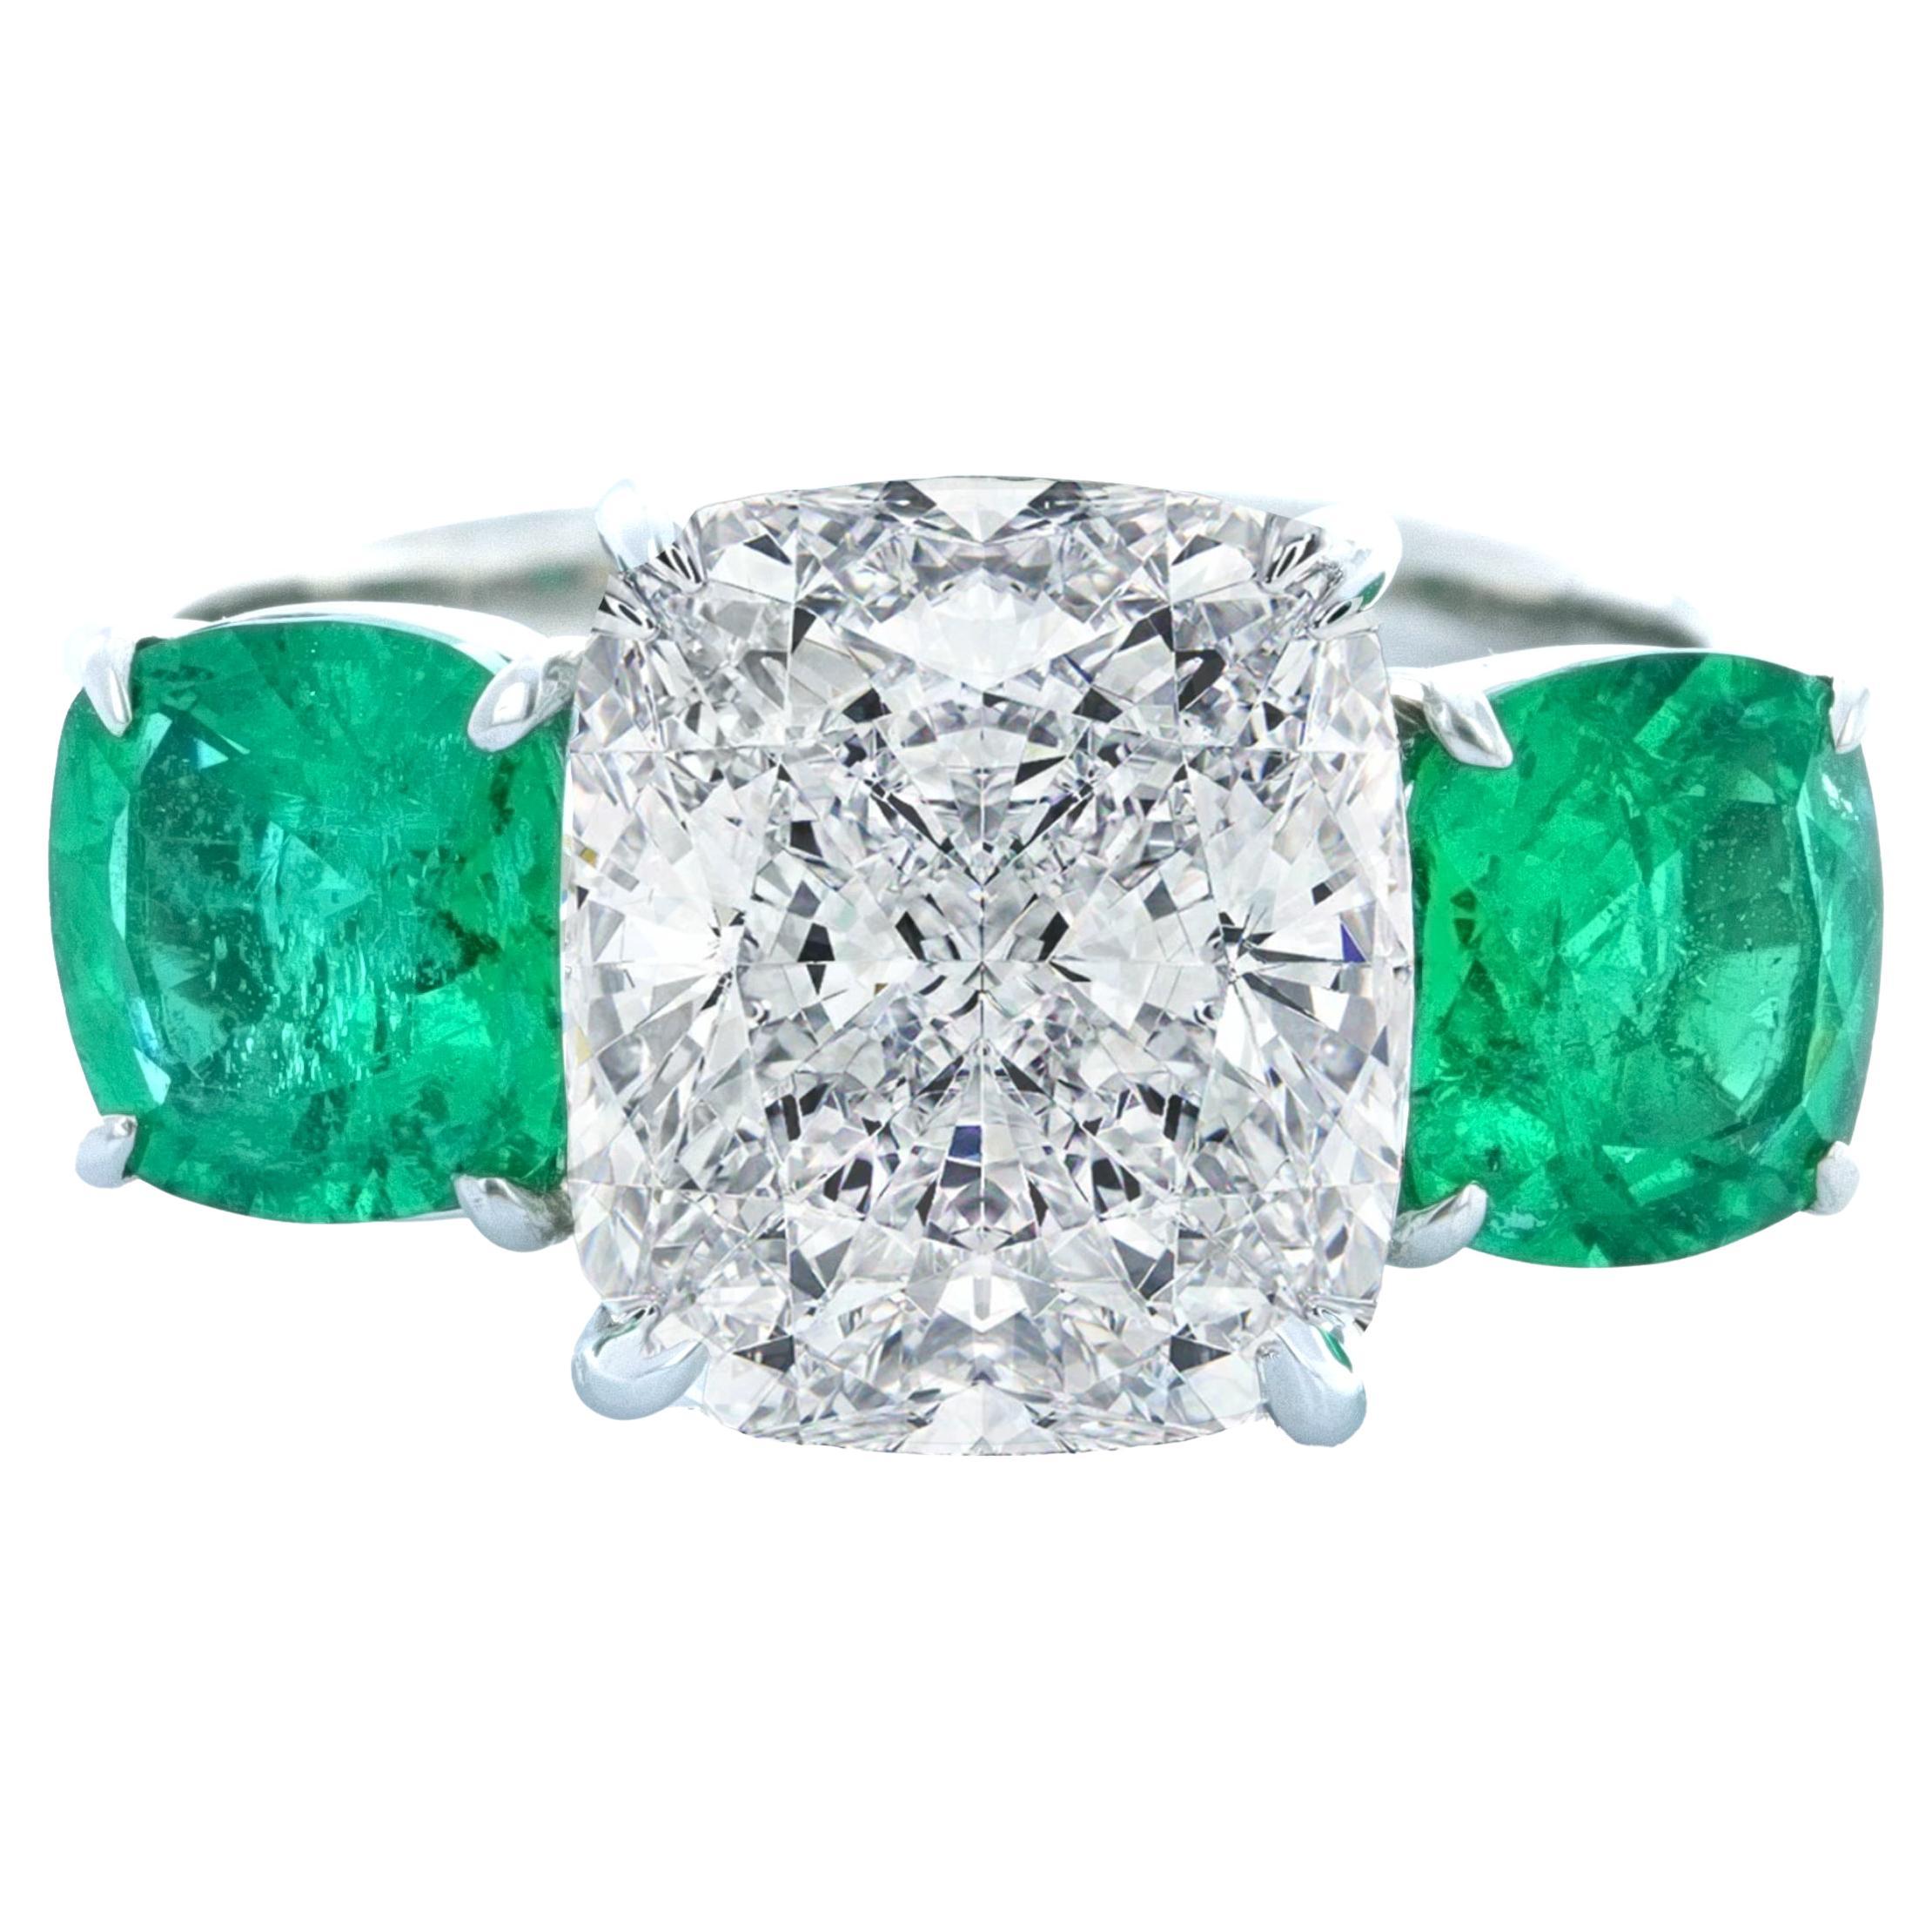 GIA Certified, Three-Stone Diamond and Emerald Ring